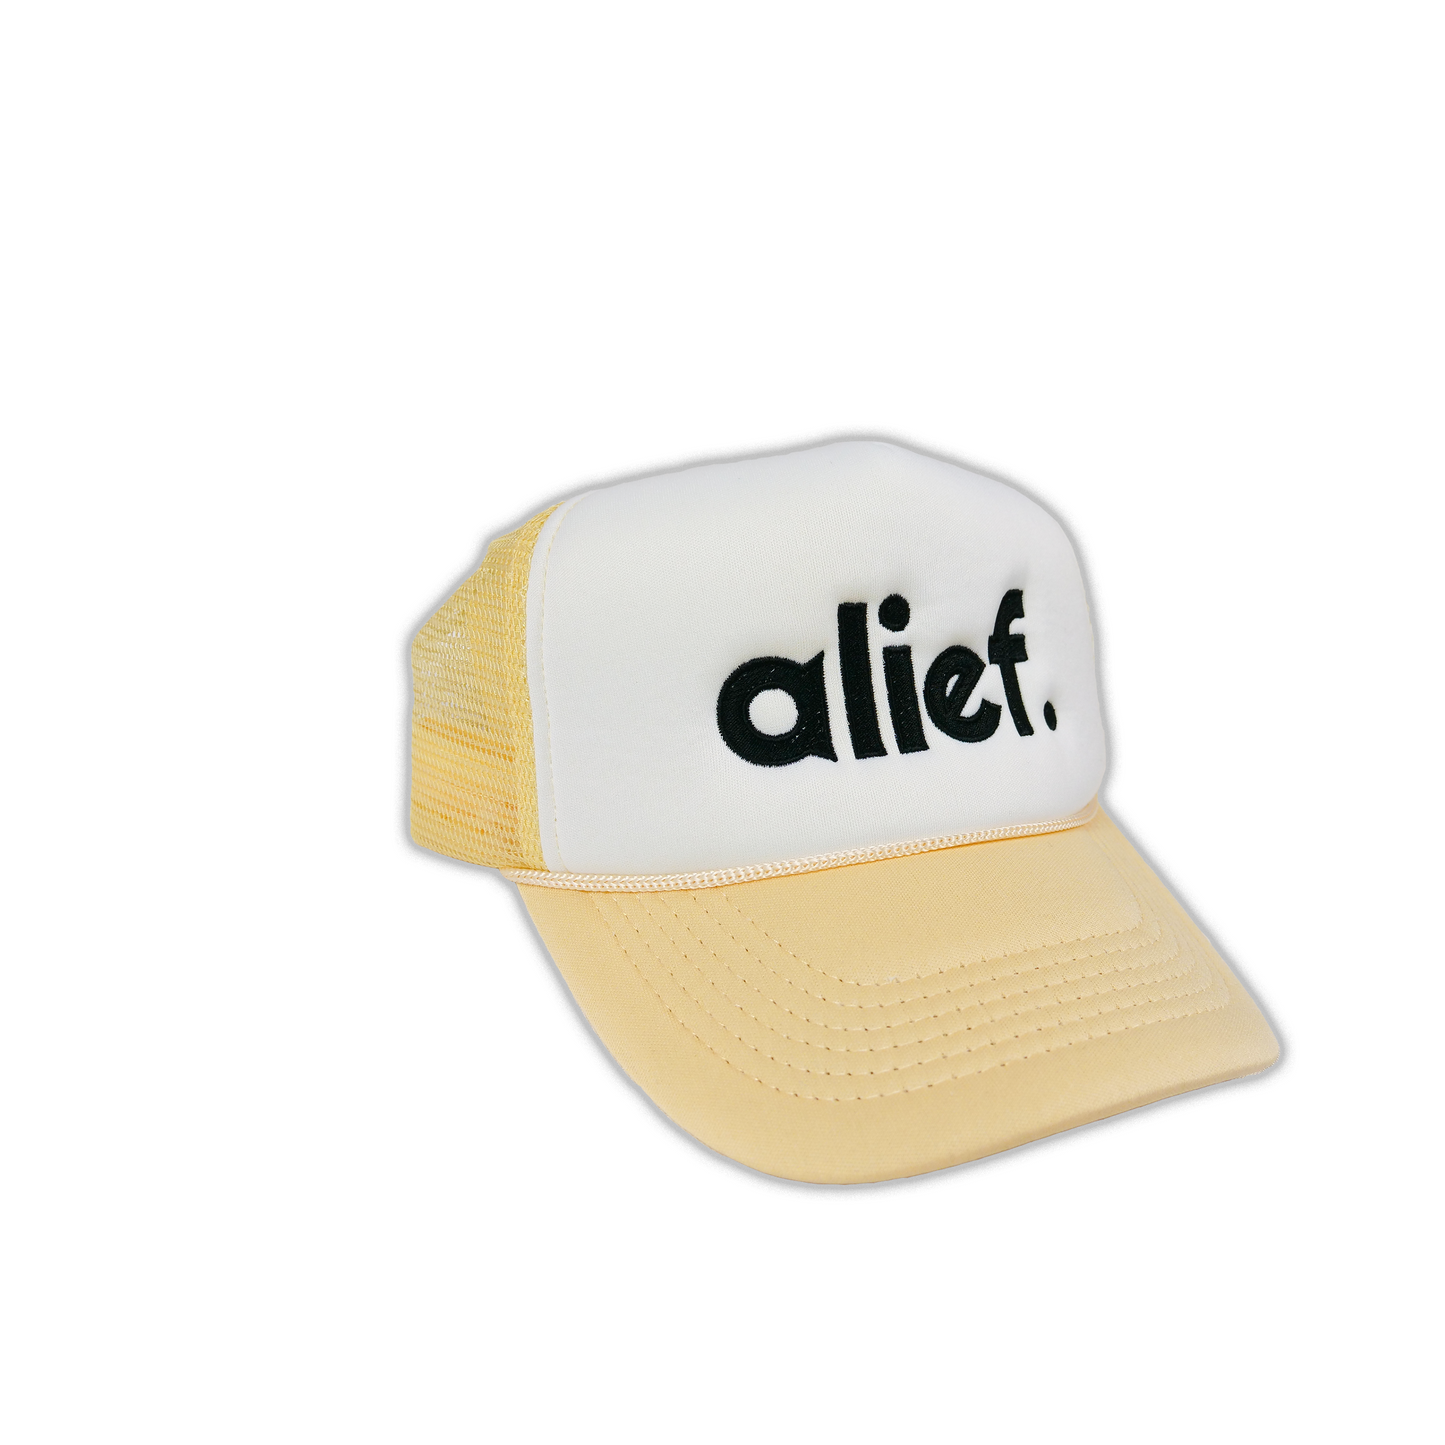 Bold Alief Trucker Hat - Cream and White/Black